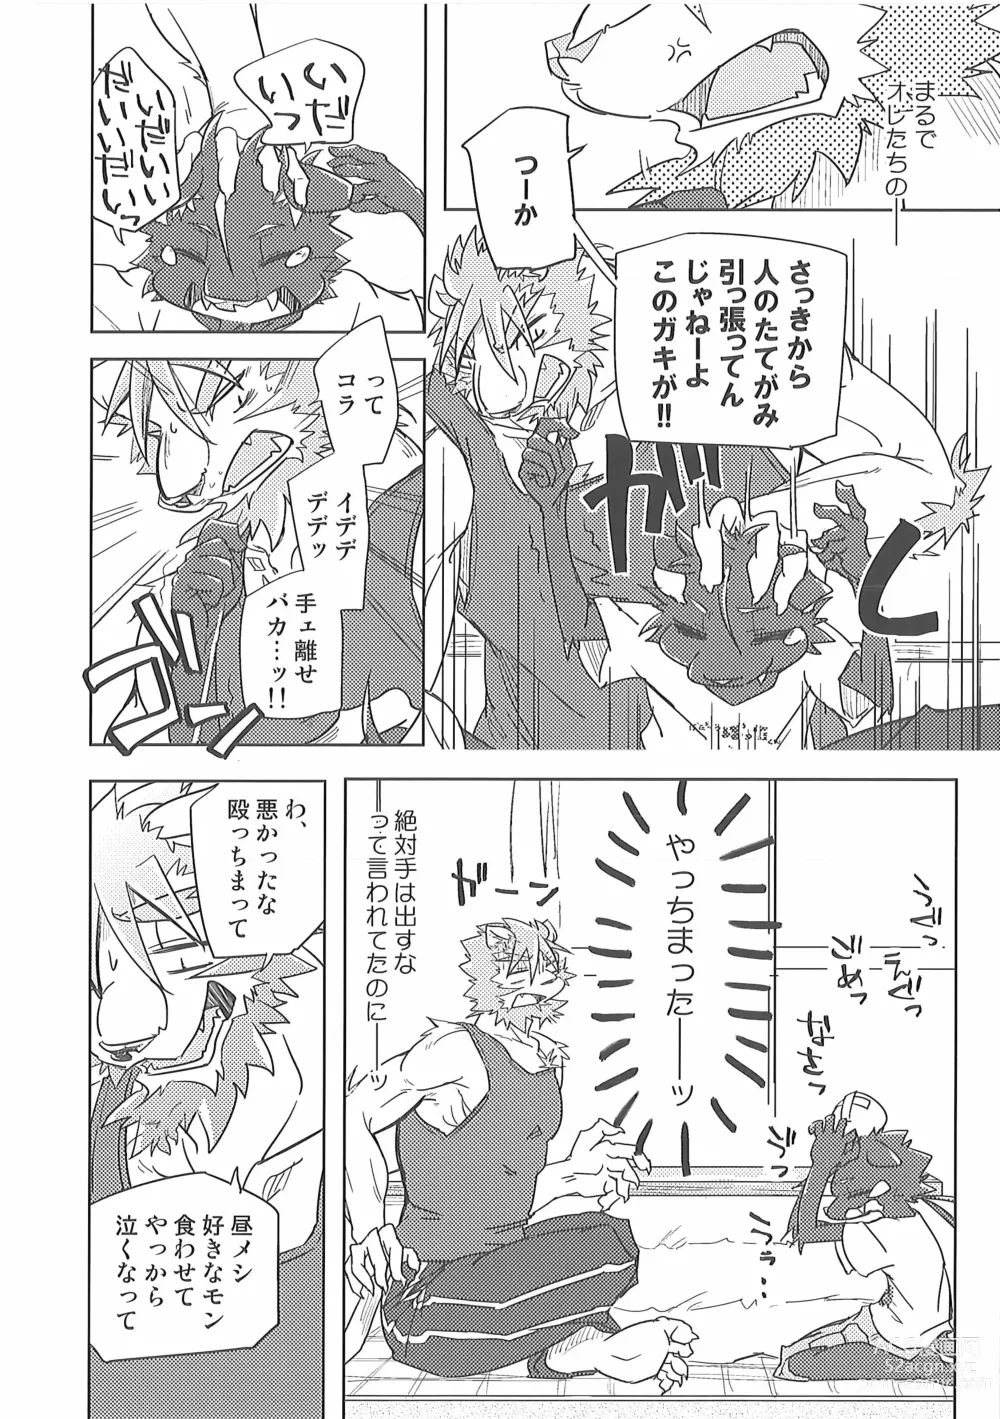 Page 7 of doujinshi Crazy Waltz